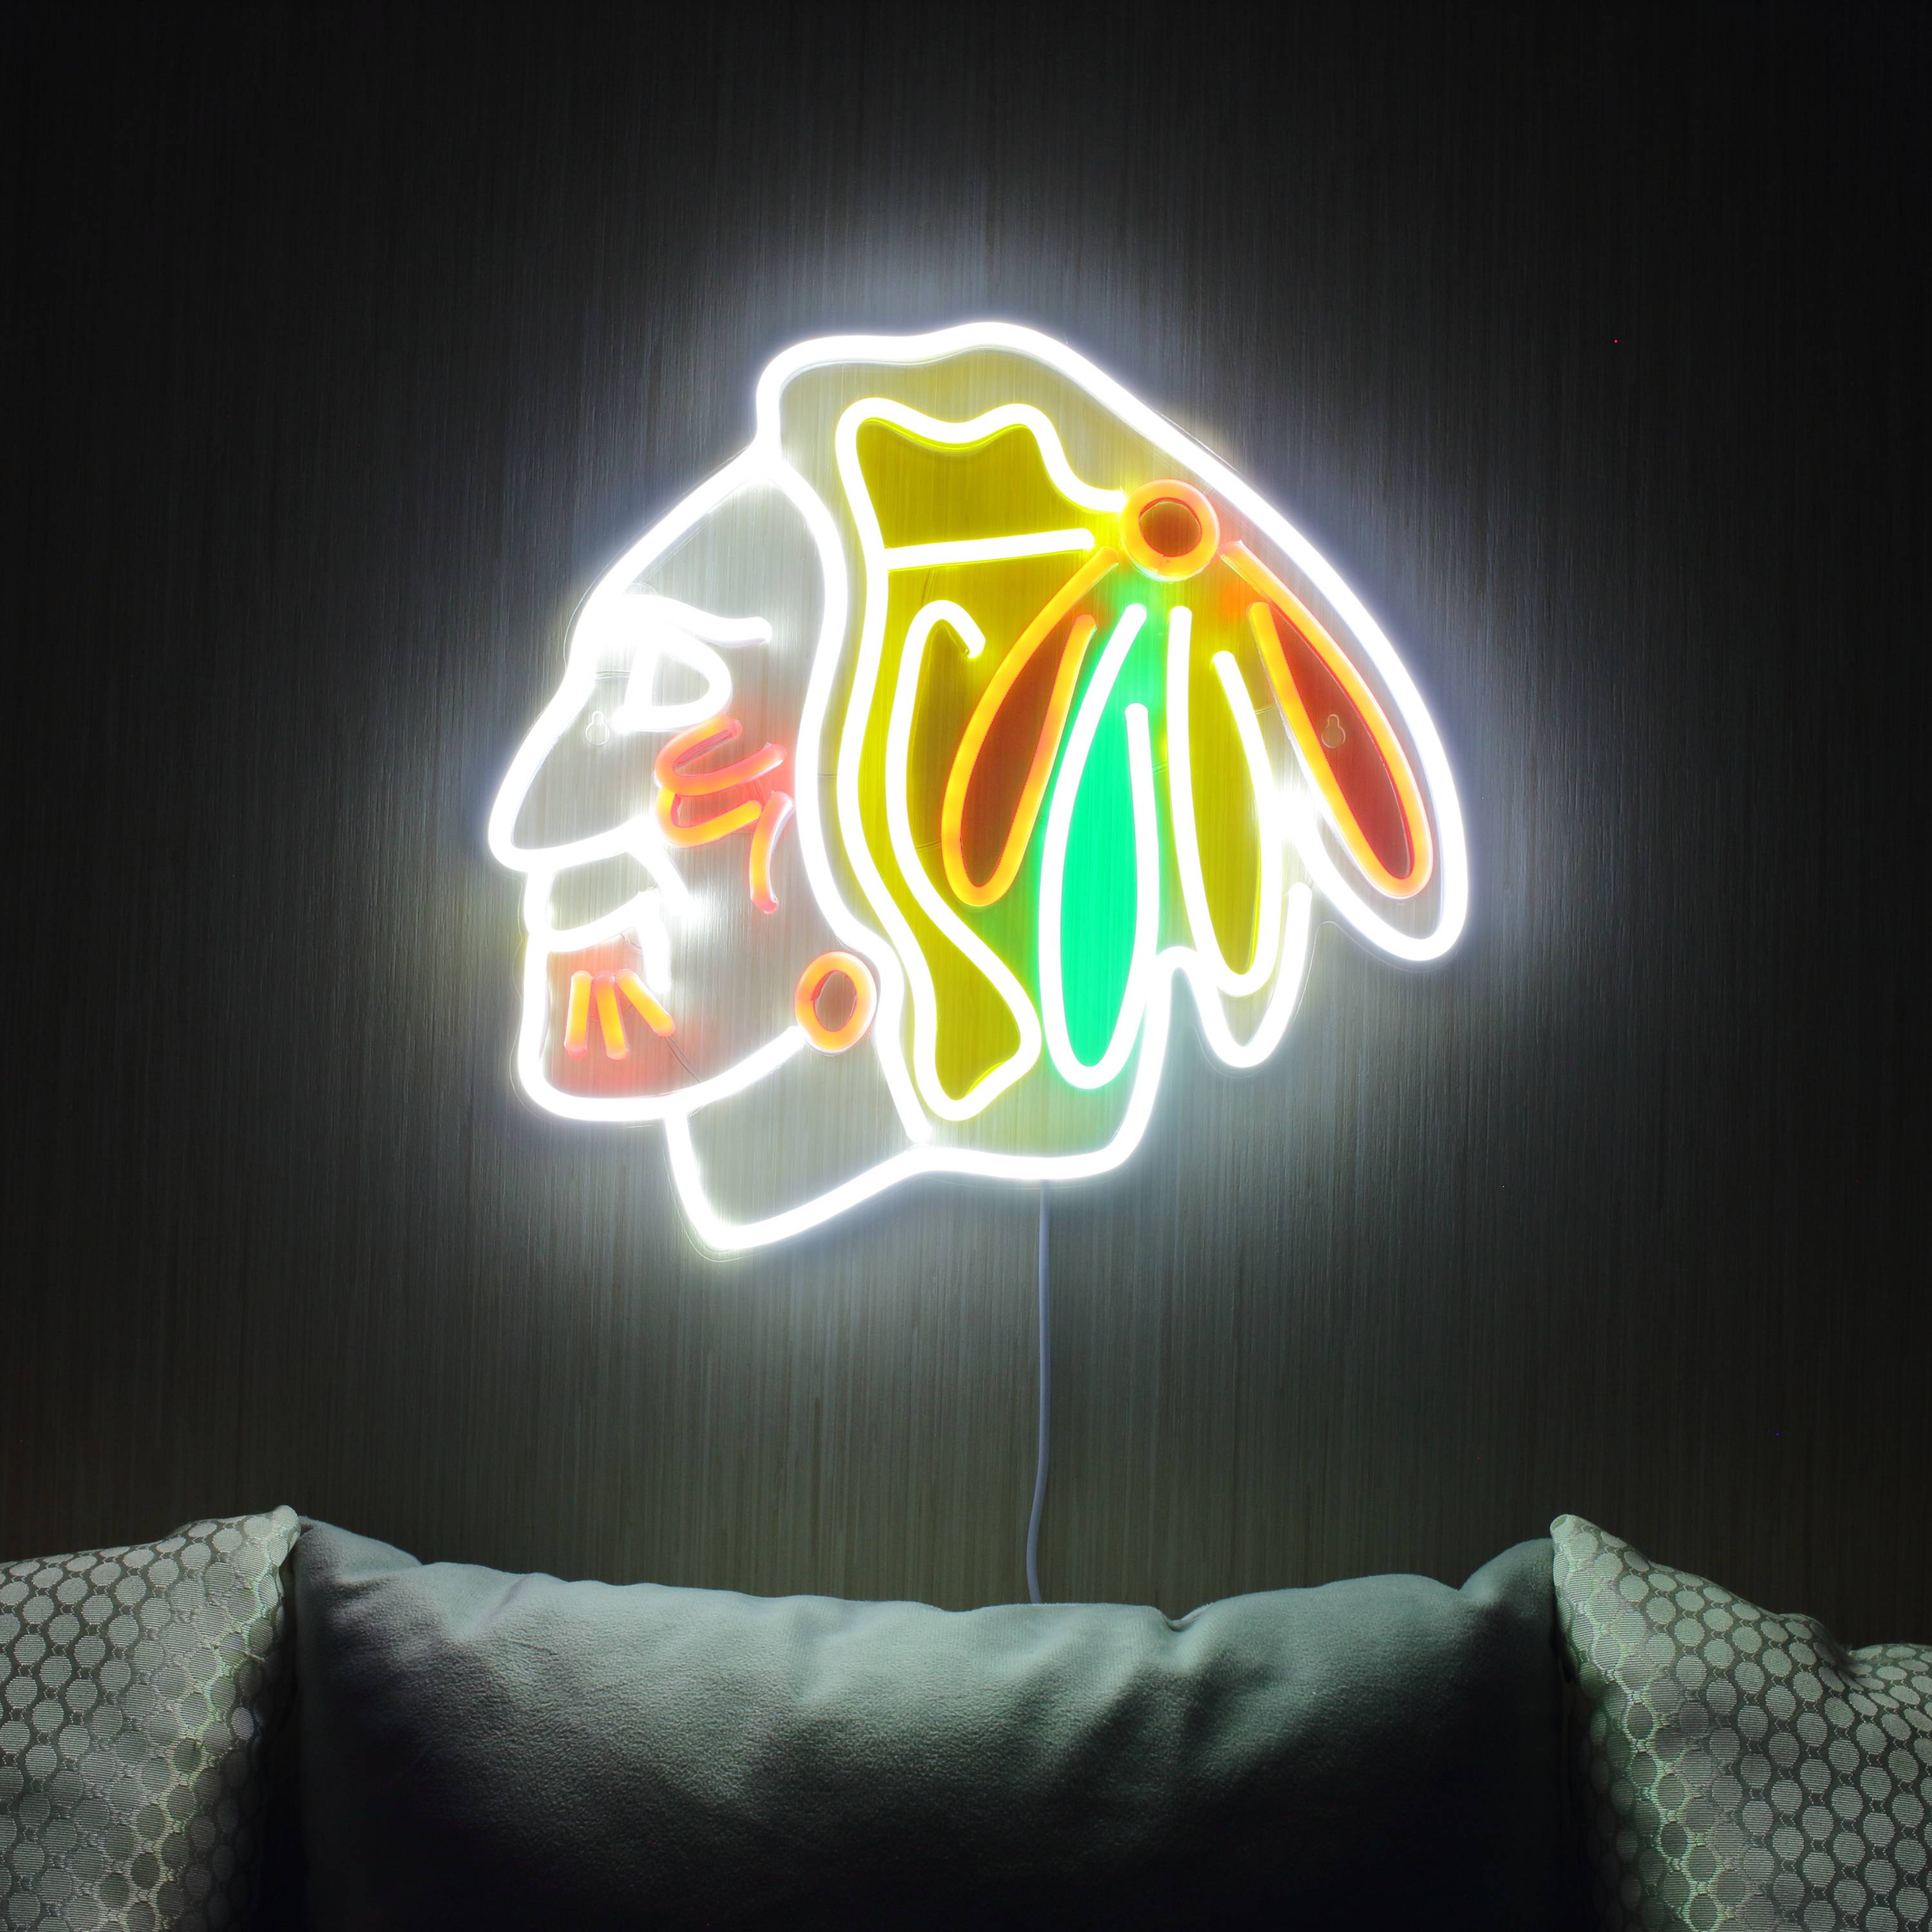 NHL Chicago Blackhawks Large Flex Neon LED Sign